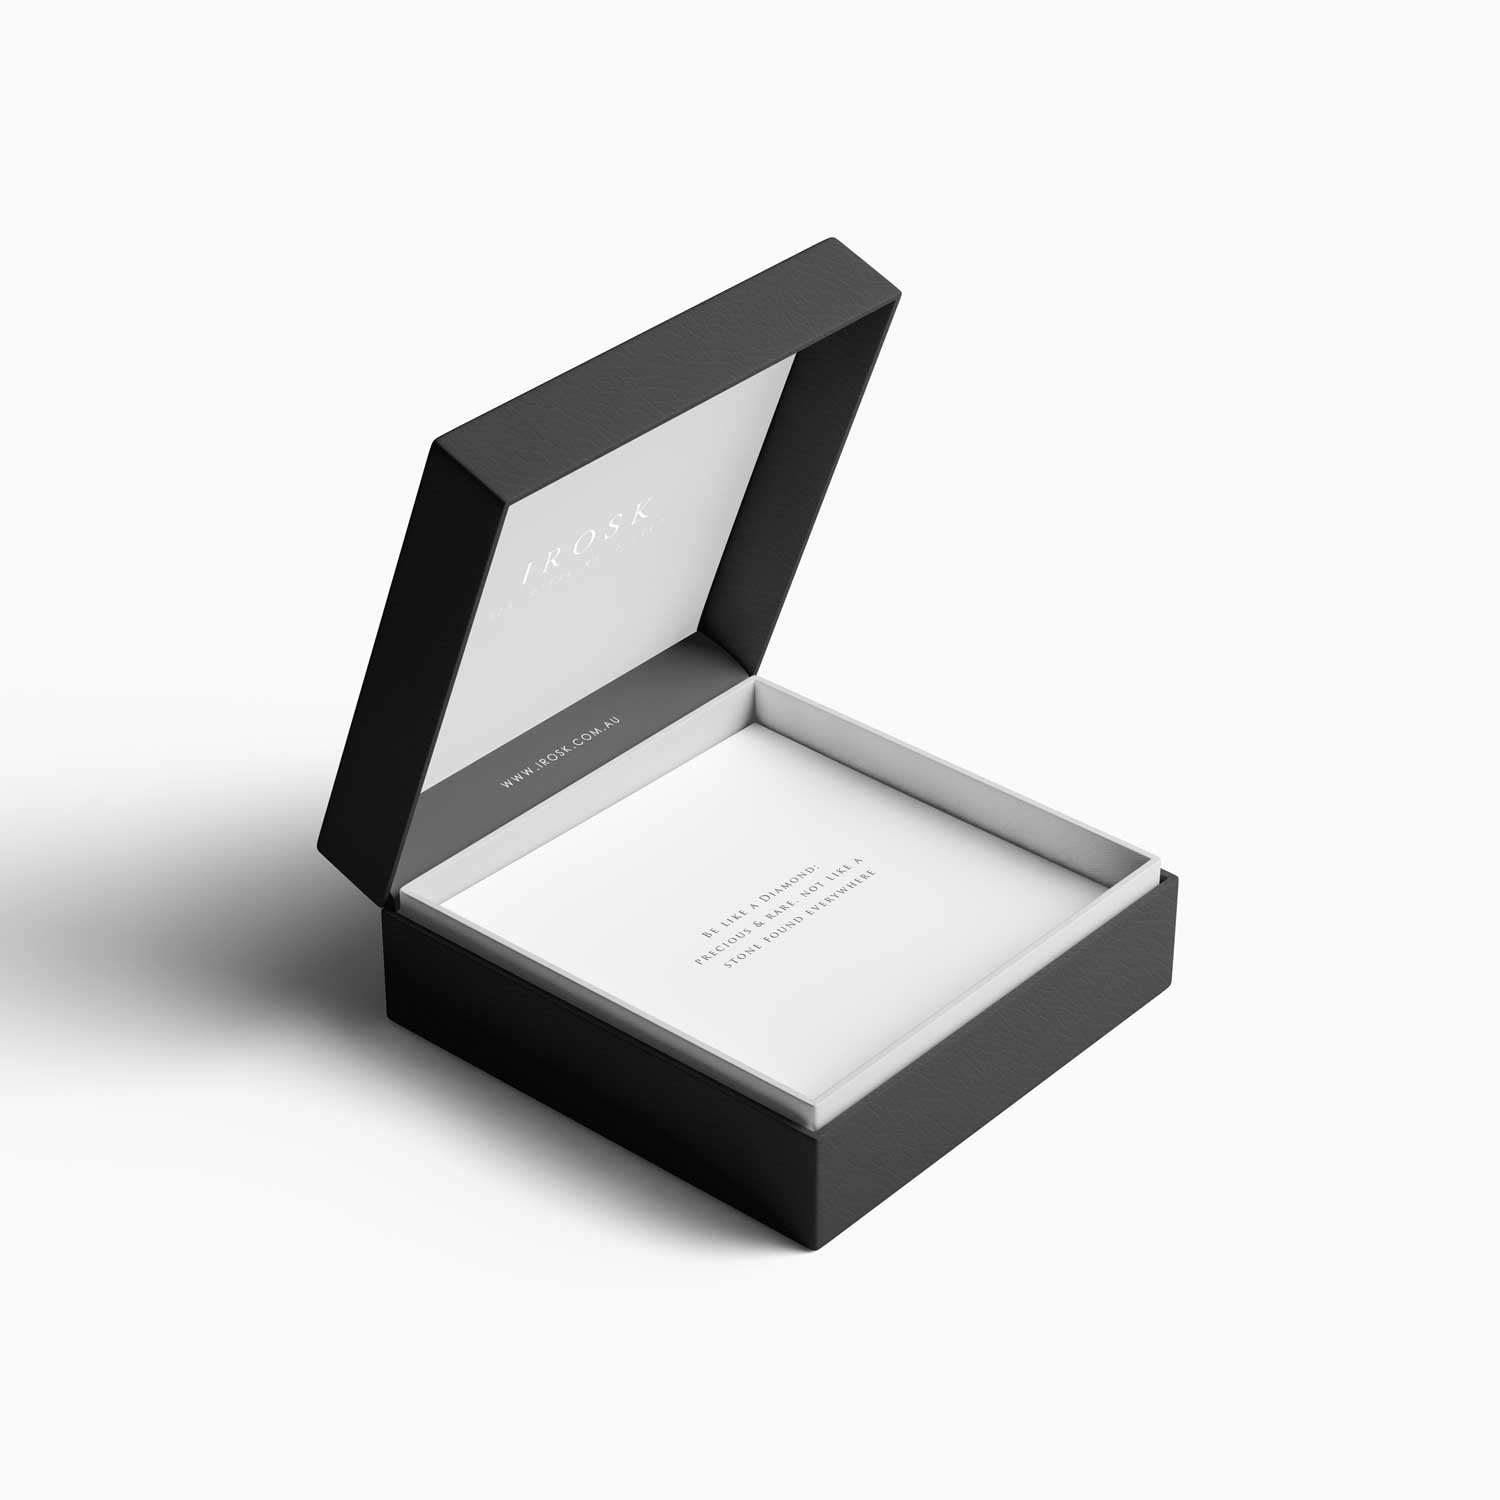 Photo of Irosk jewellery box for added luxury